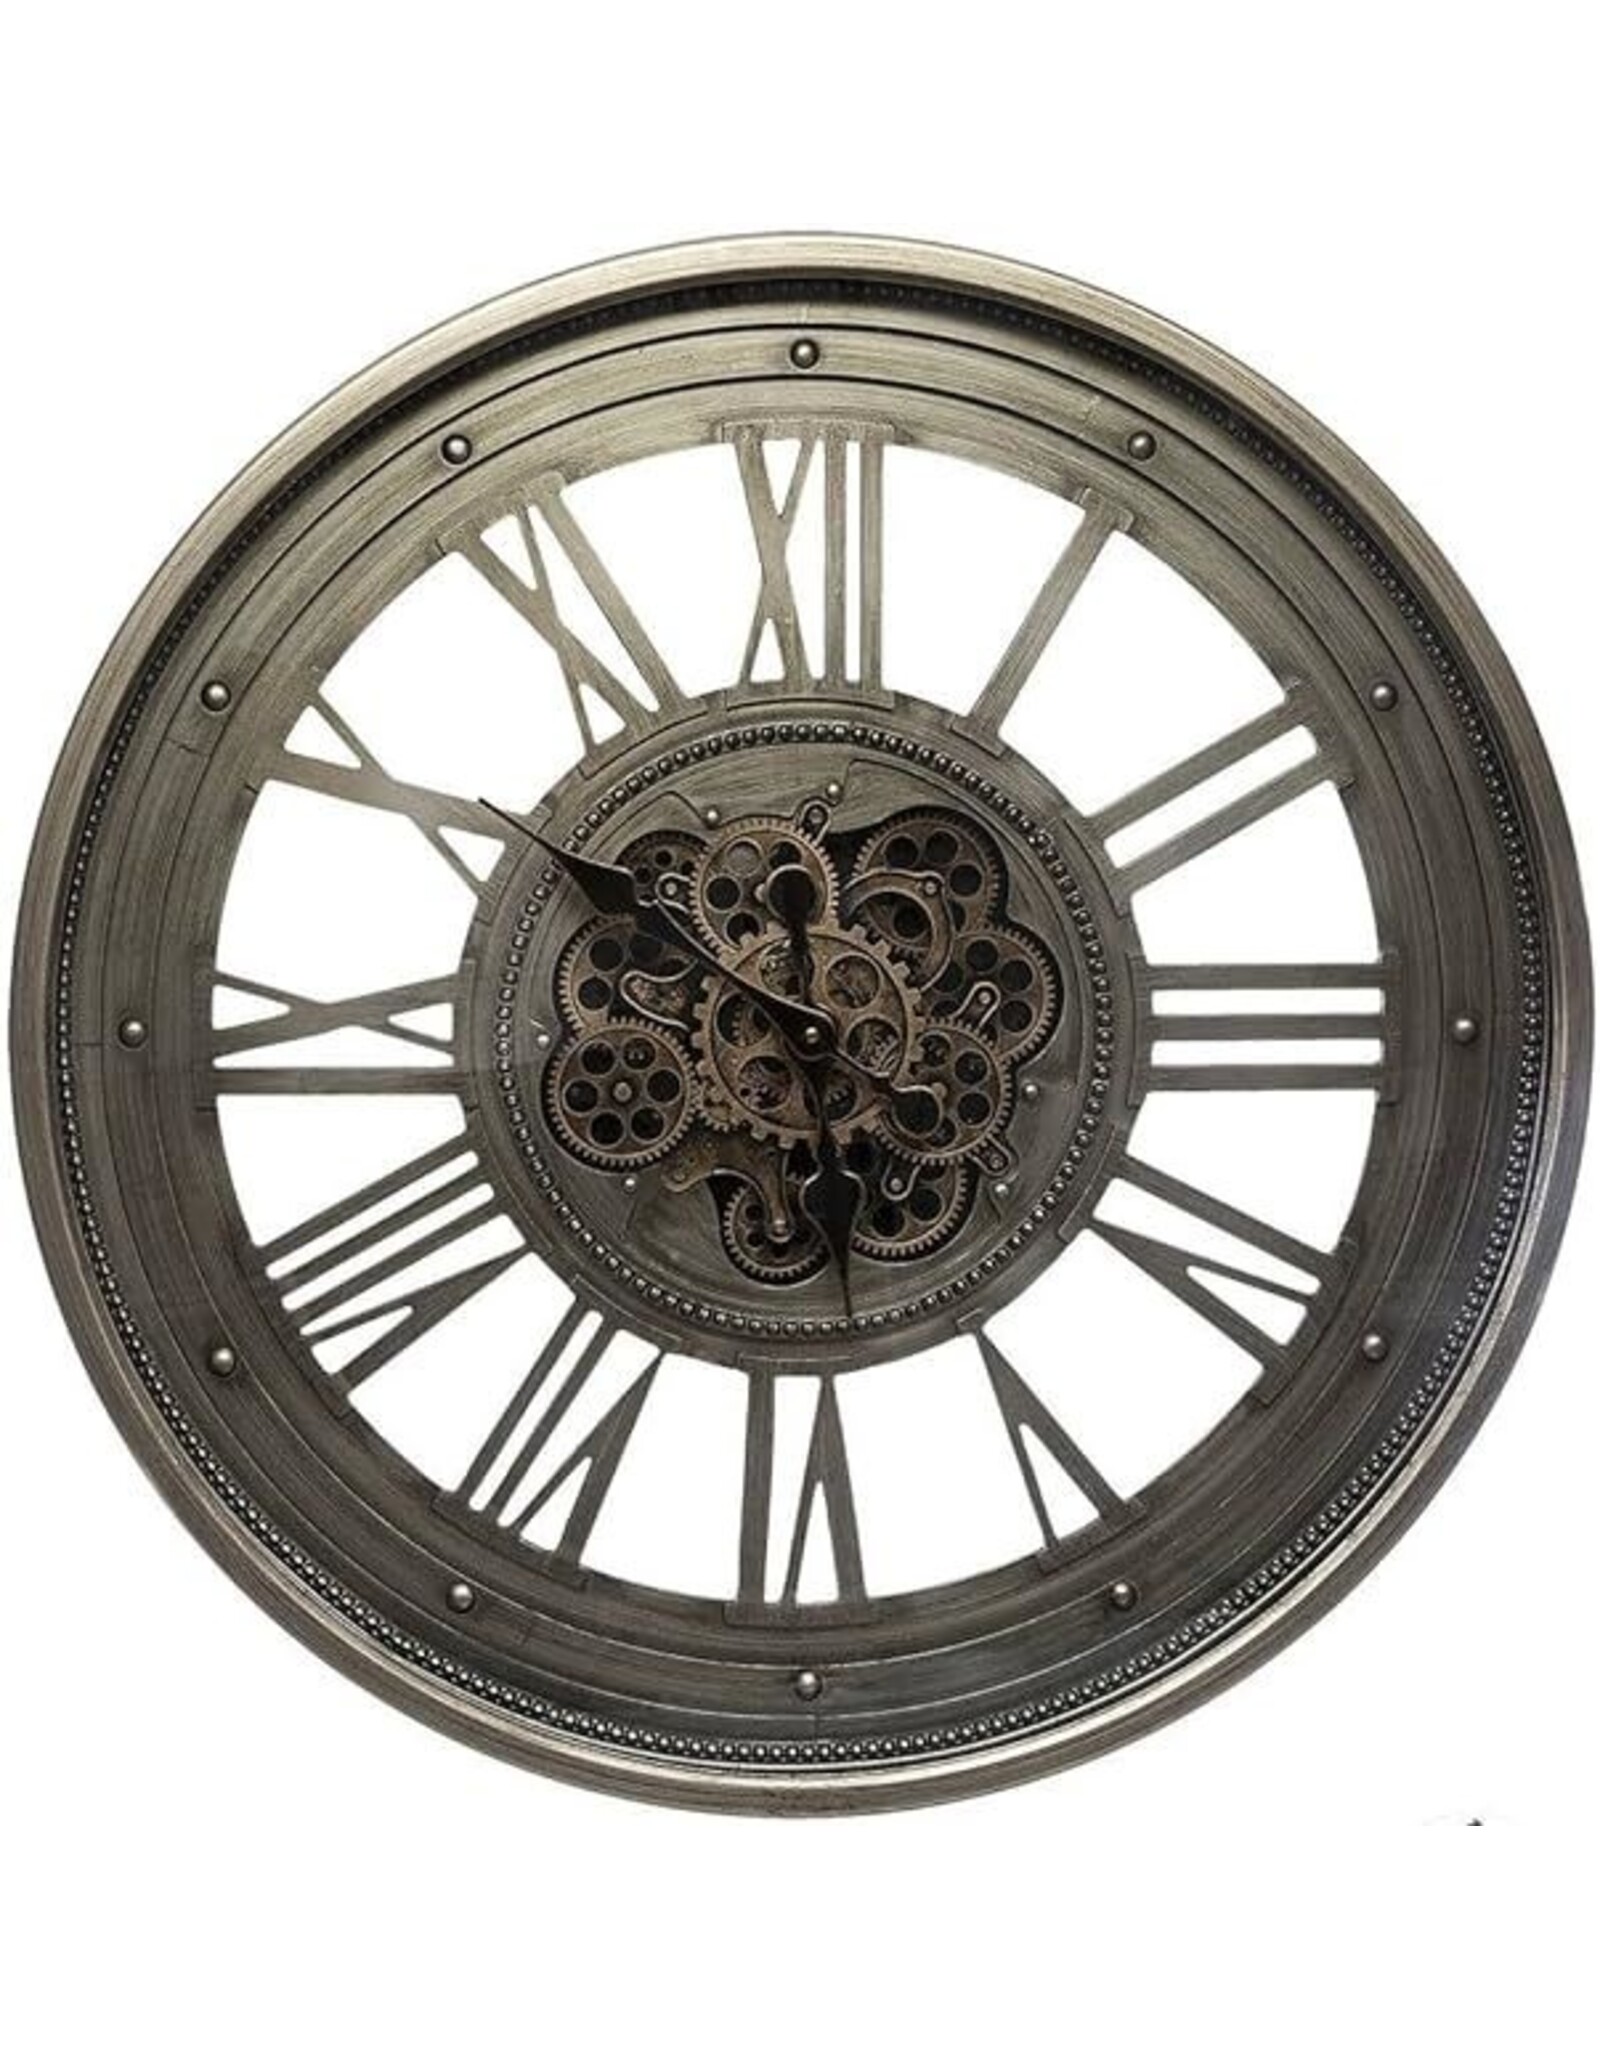 Trukado Miscellaneous - Wall clock Roman numerals and moving gears 80cm